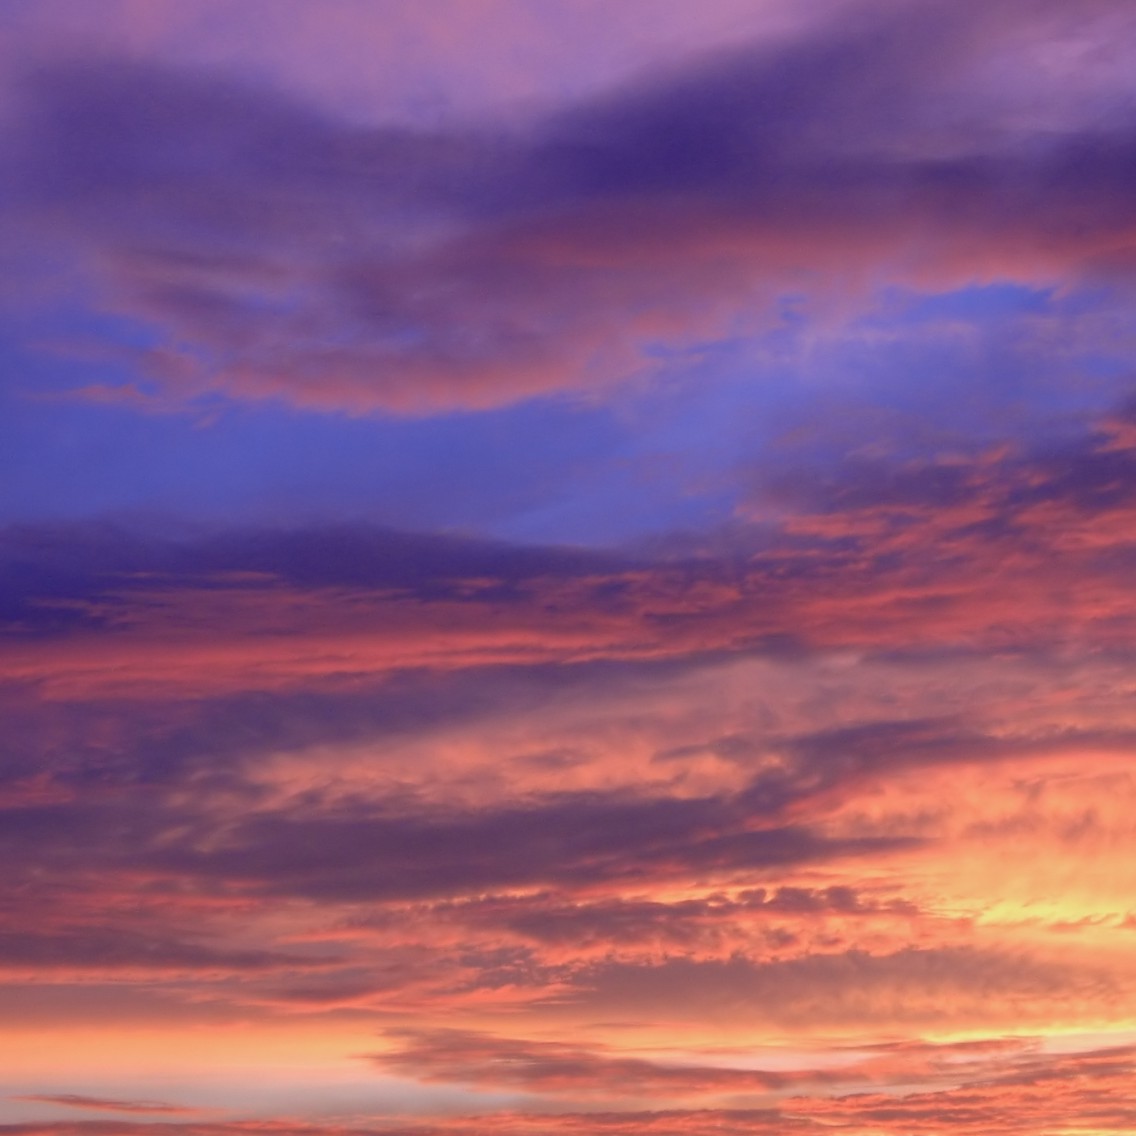 Evening Sky Theme - Visual Studio Marketplace